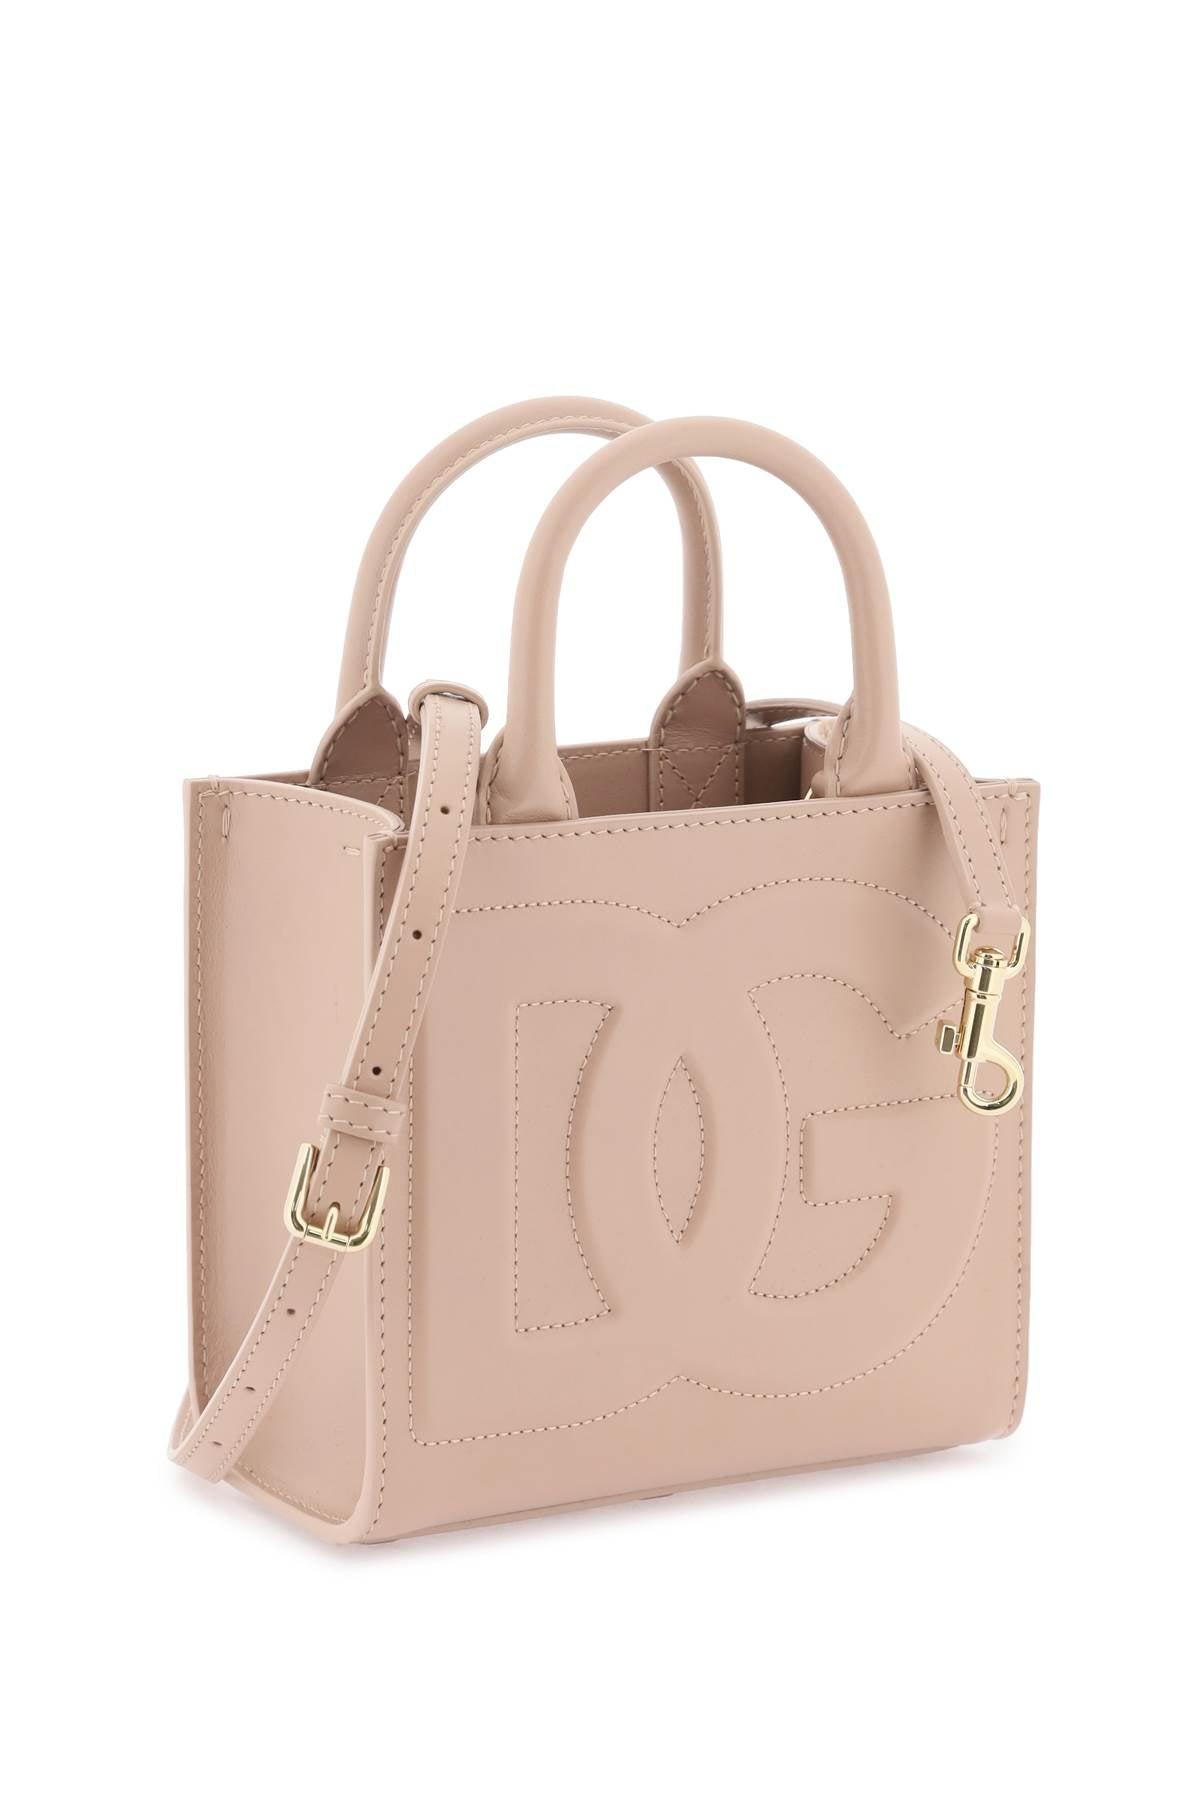 Chanel Mini Neo Executive Tote - Blue Handle Bags, Handbags